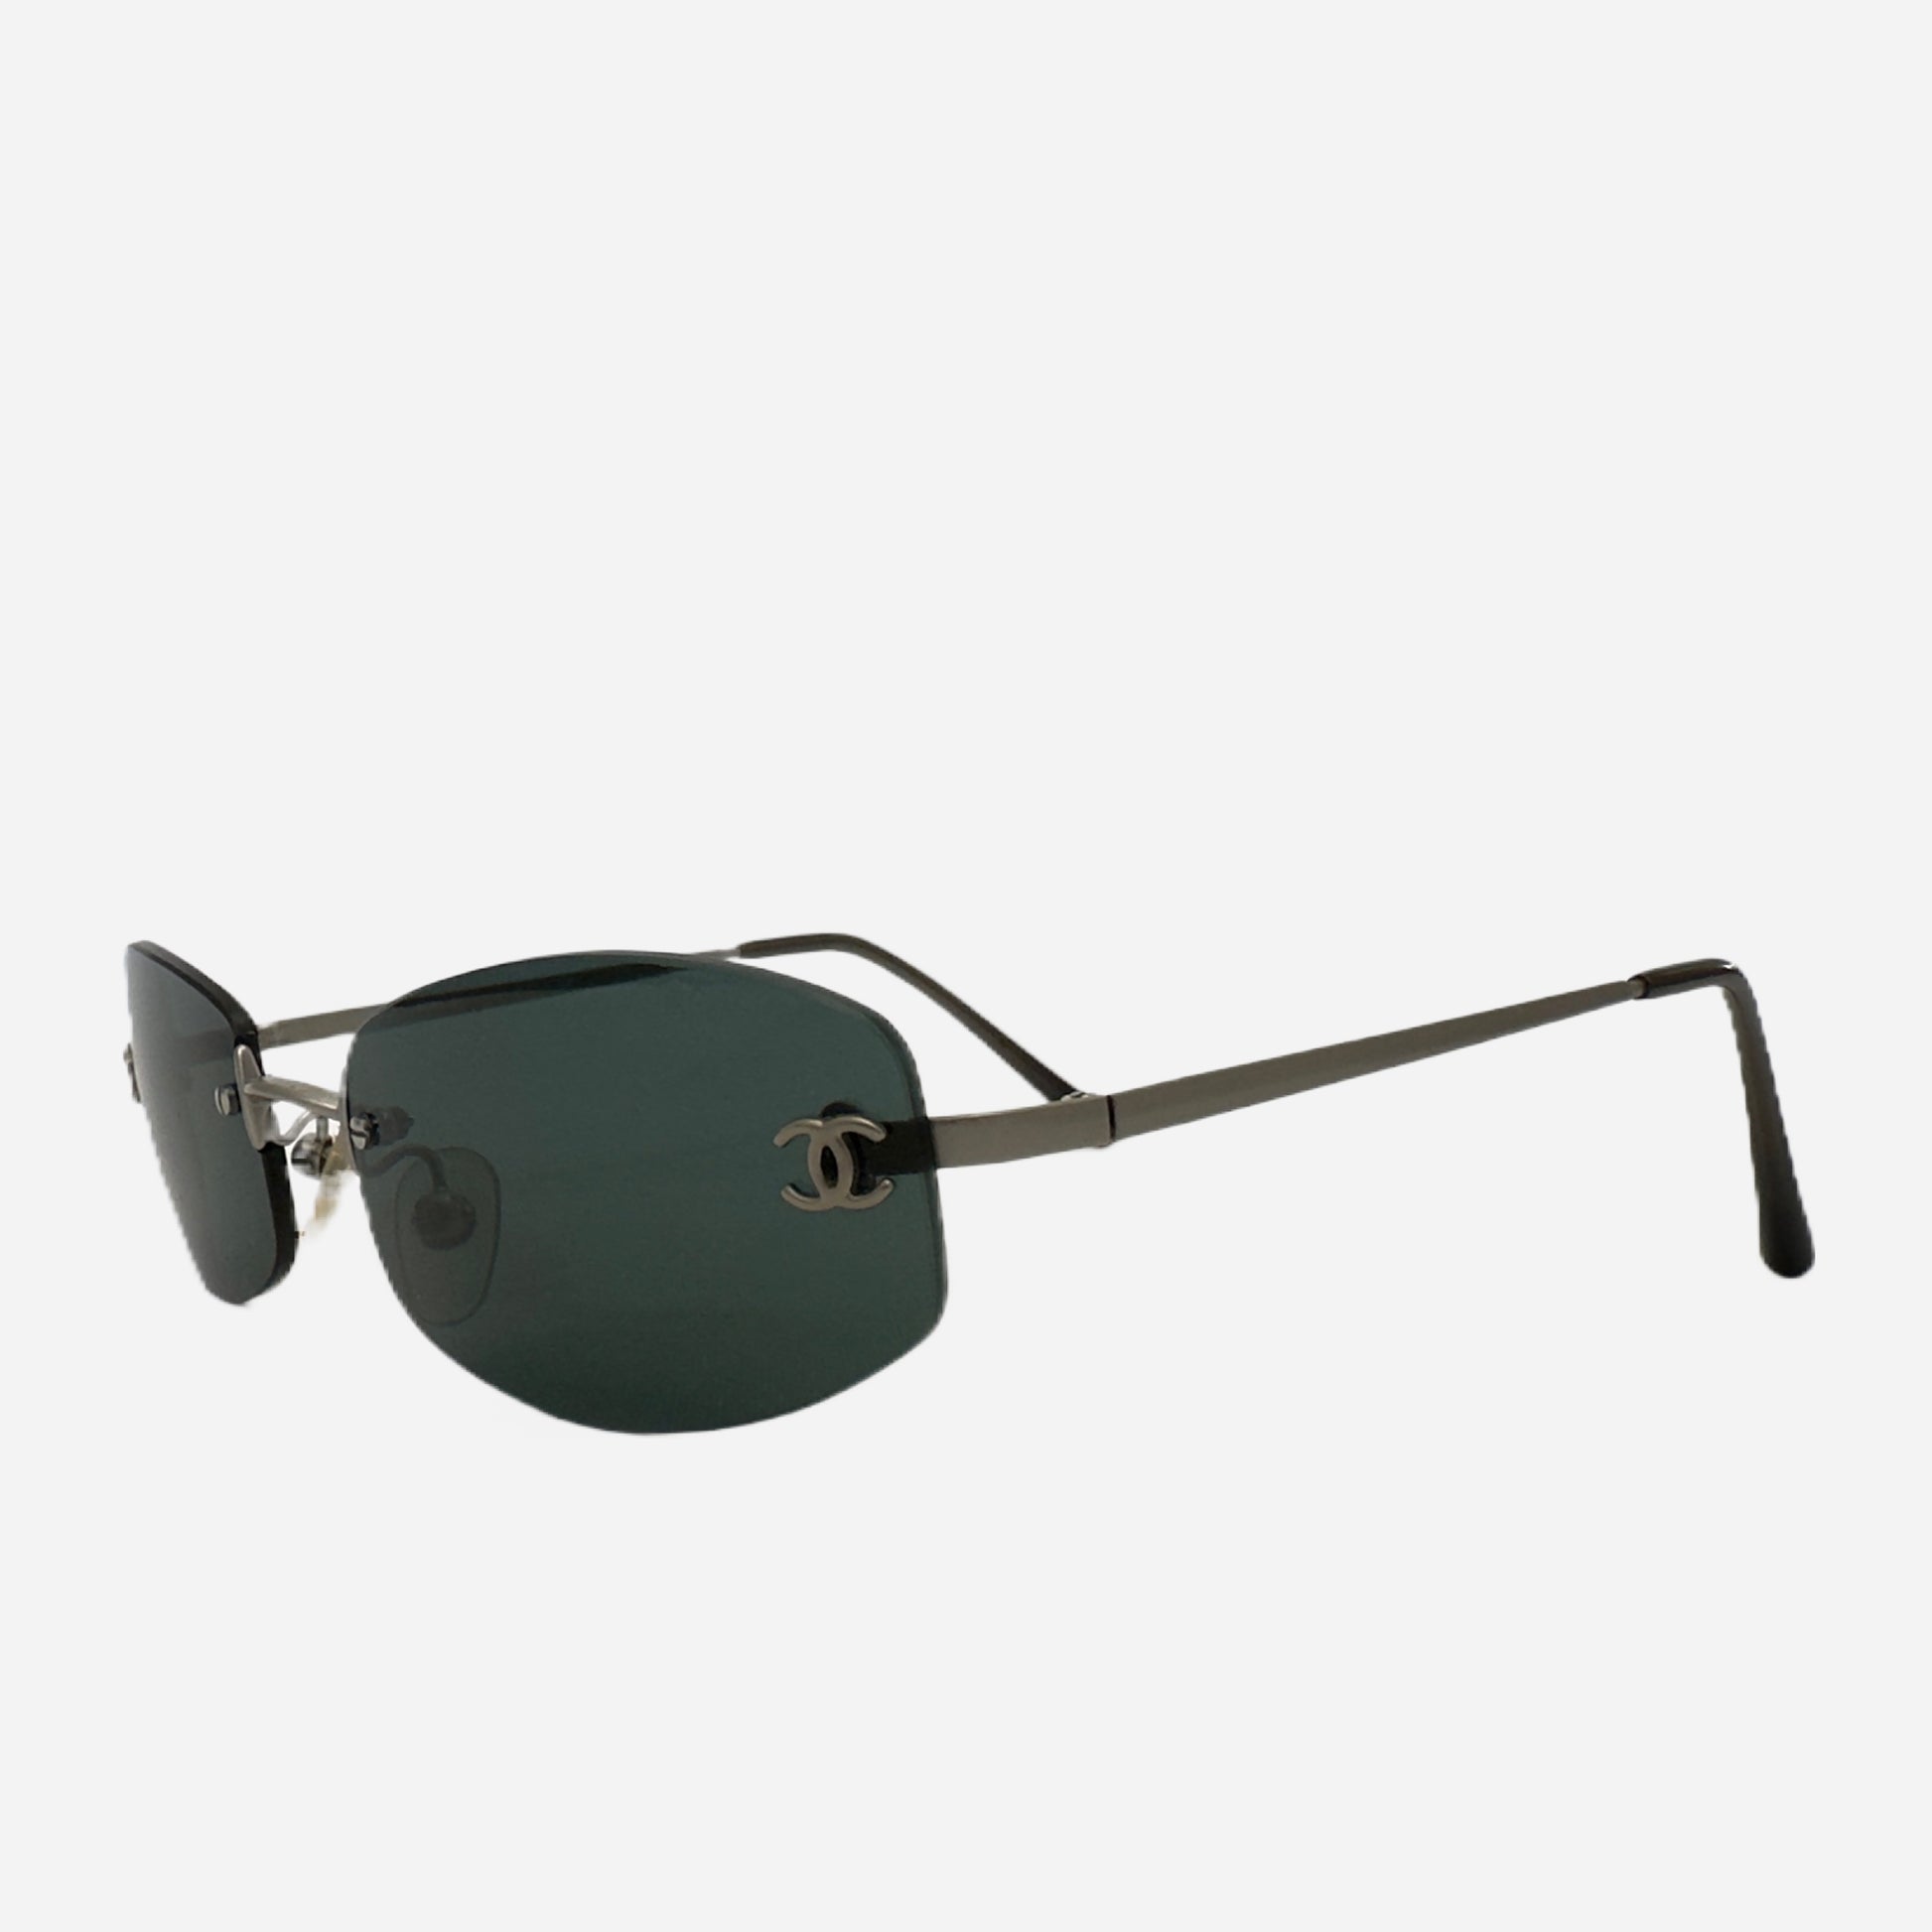 The-Seekers-Vintage-Coco-Chanel-Sunglasses-Sonnenbrille-Rahmenlos-4002-front